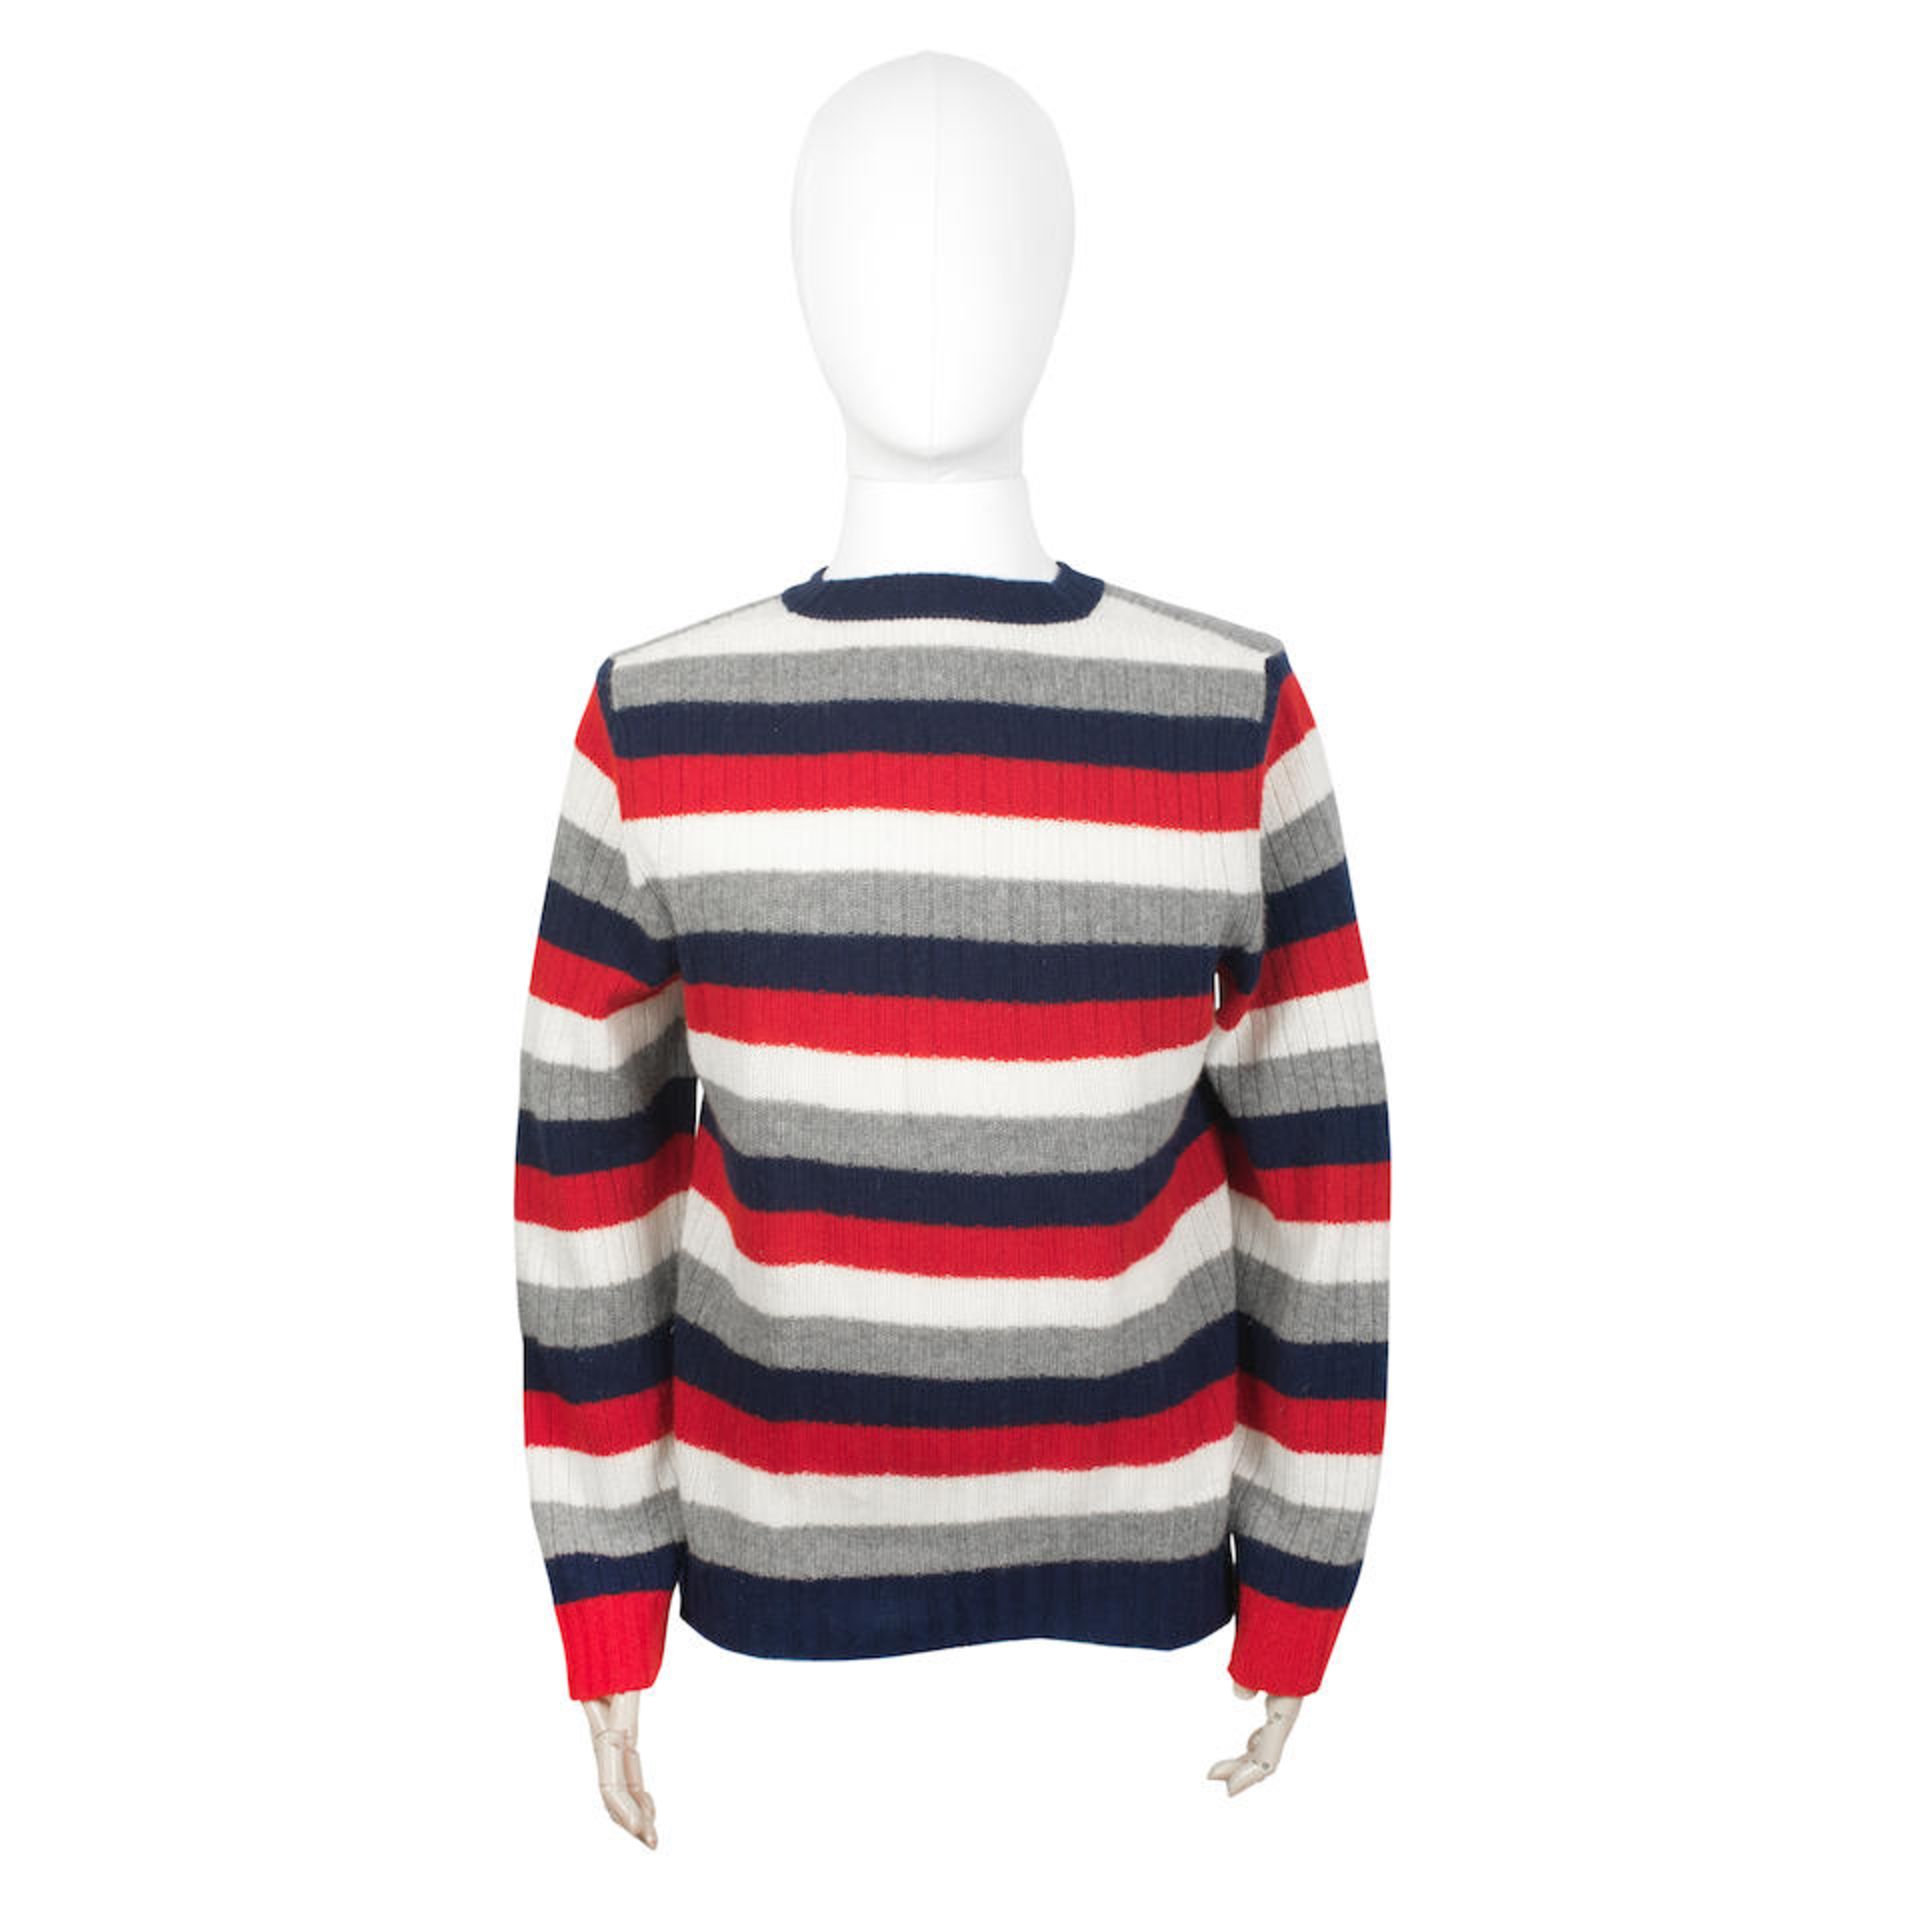 Gucci: a Men's Striped Knitted Cashmere Jumper